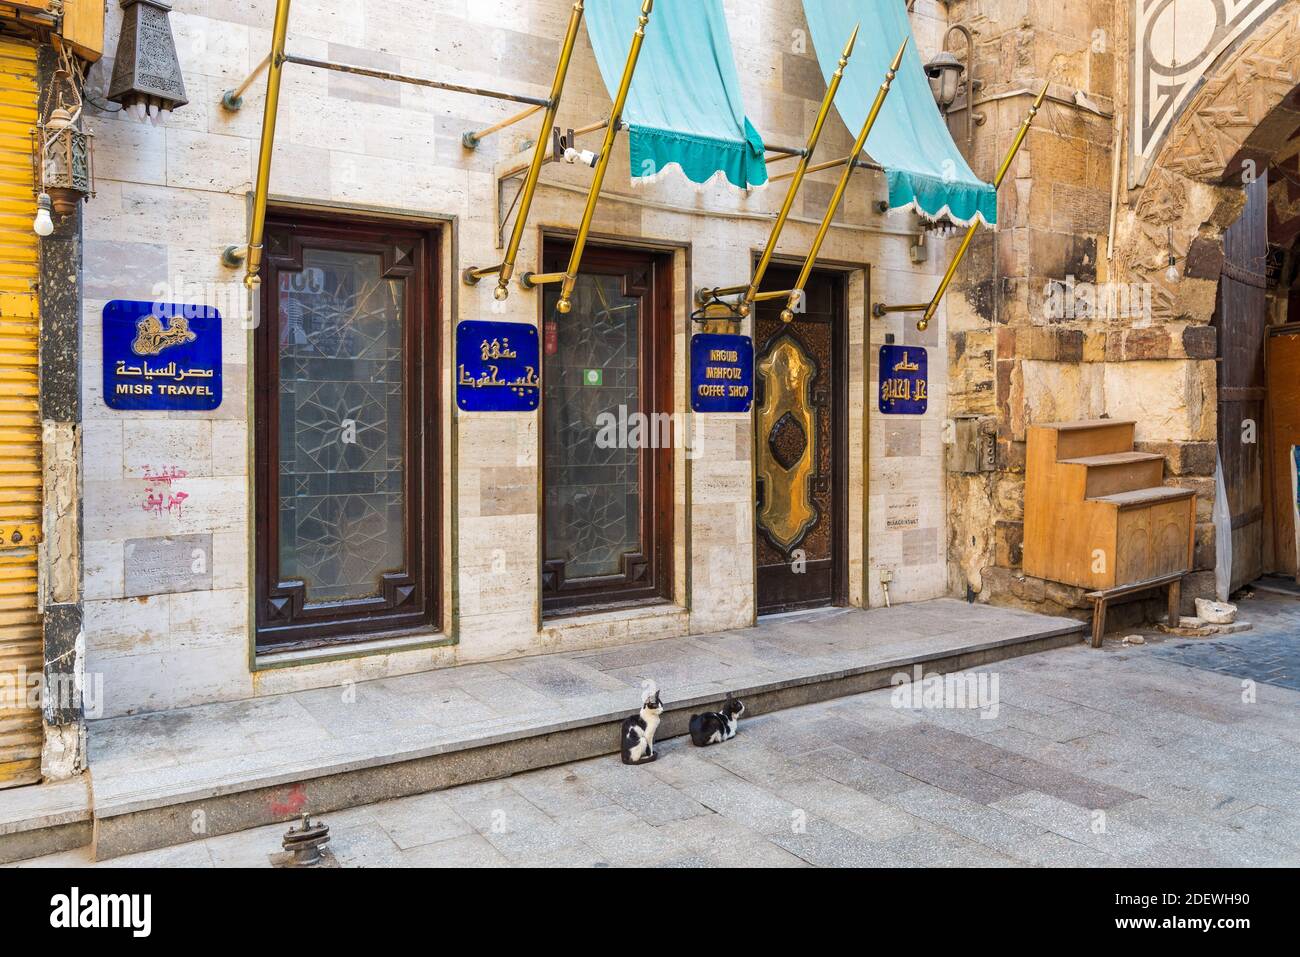 Cairo, Egitto - Giugno 26 2020: Moderna e famosa caffetteria Naguib Mahfouz, situata nella storica era Mamluk Khan al-Khalili famoso bazar e souq, chiuso durante il blocco del coronavirus Foto Stock